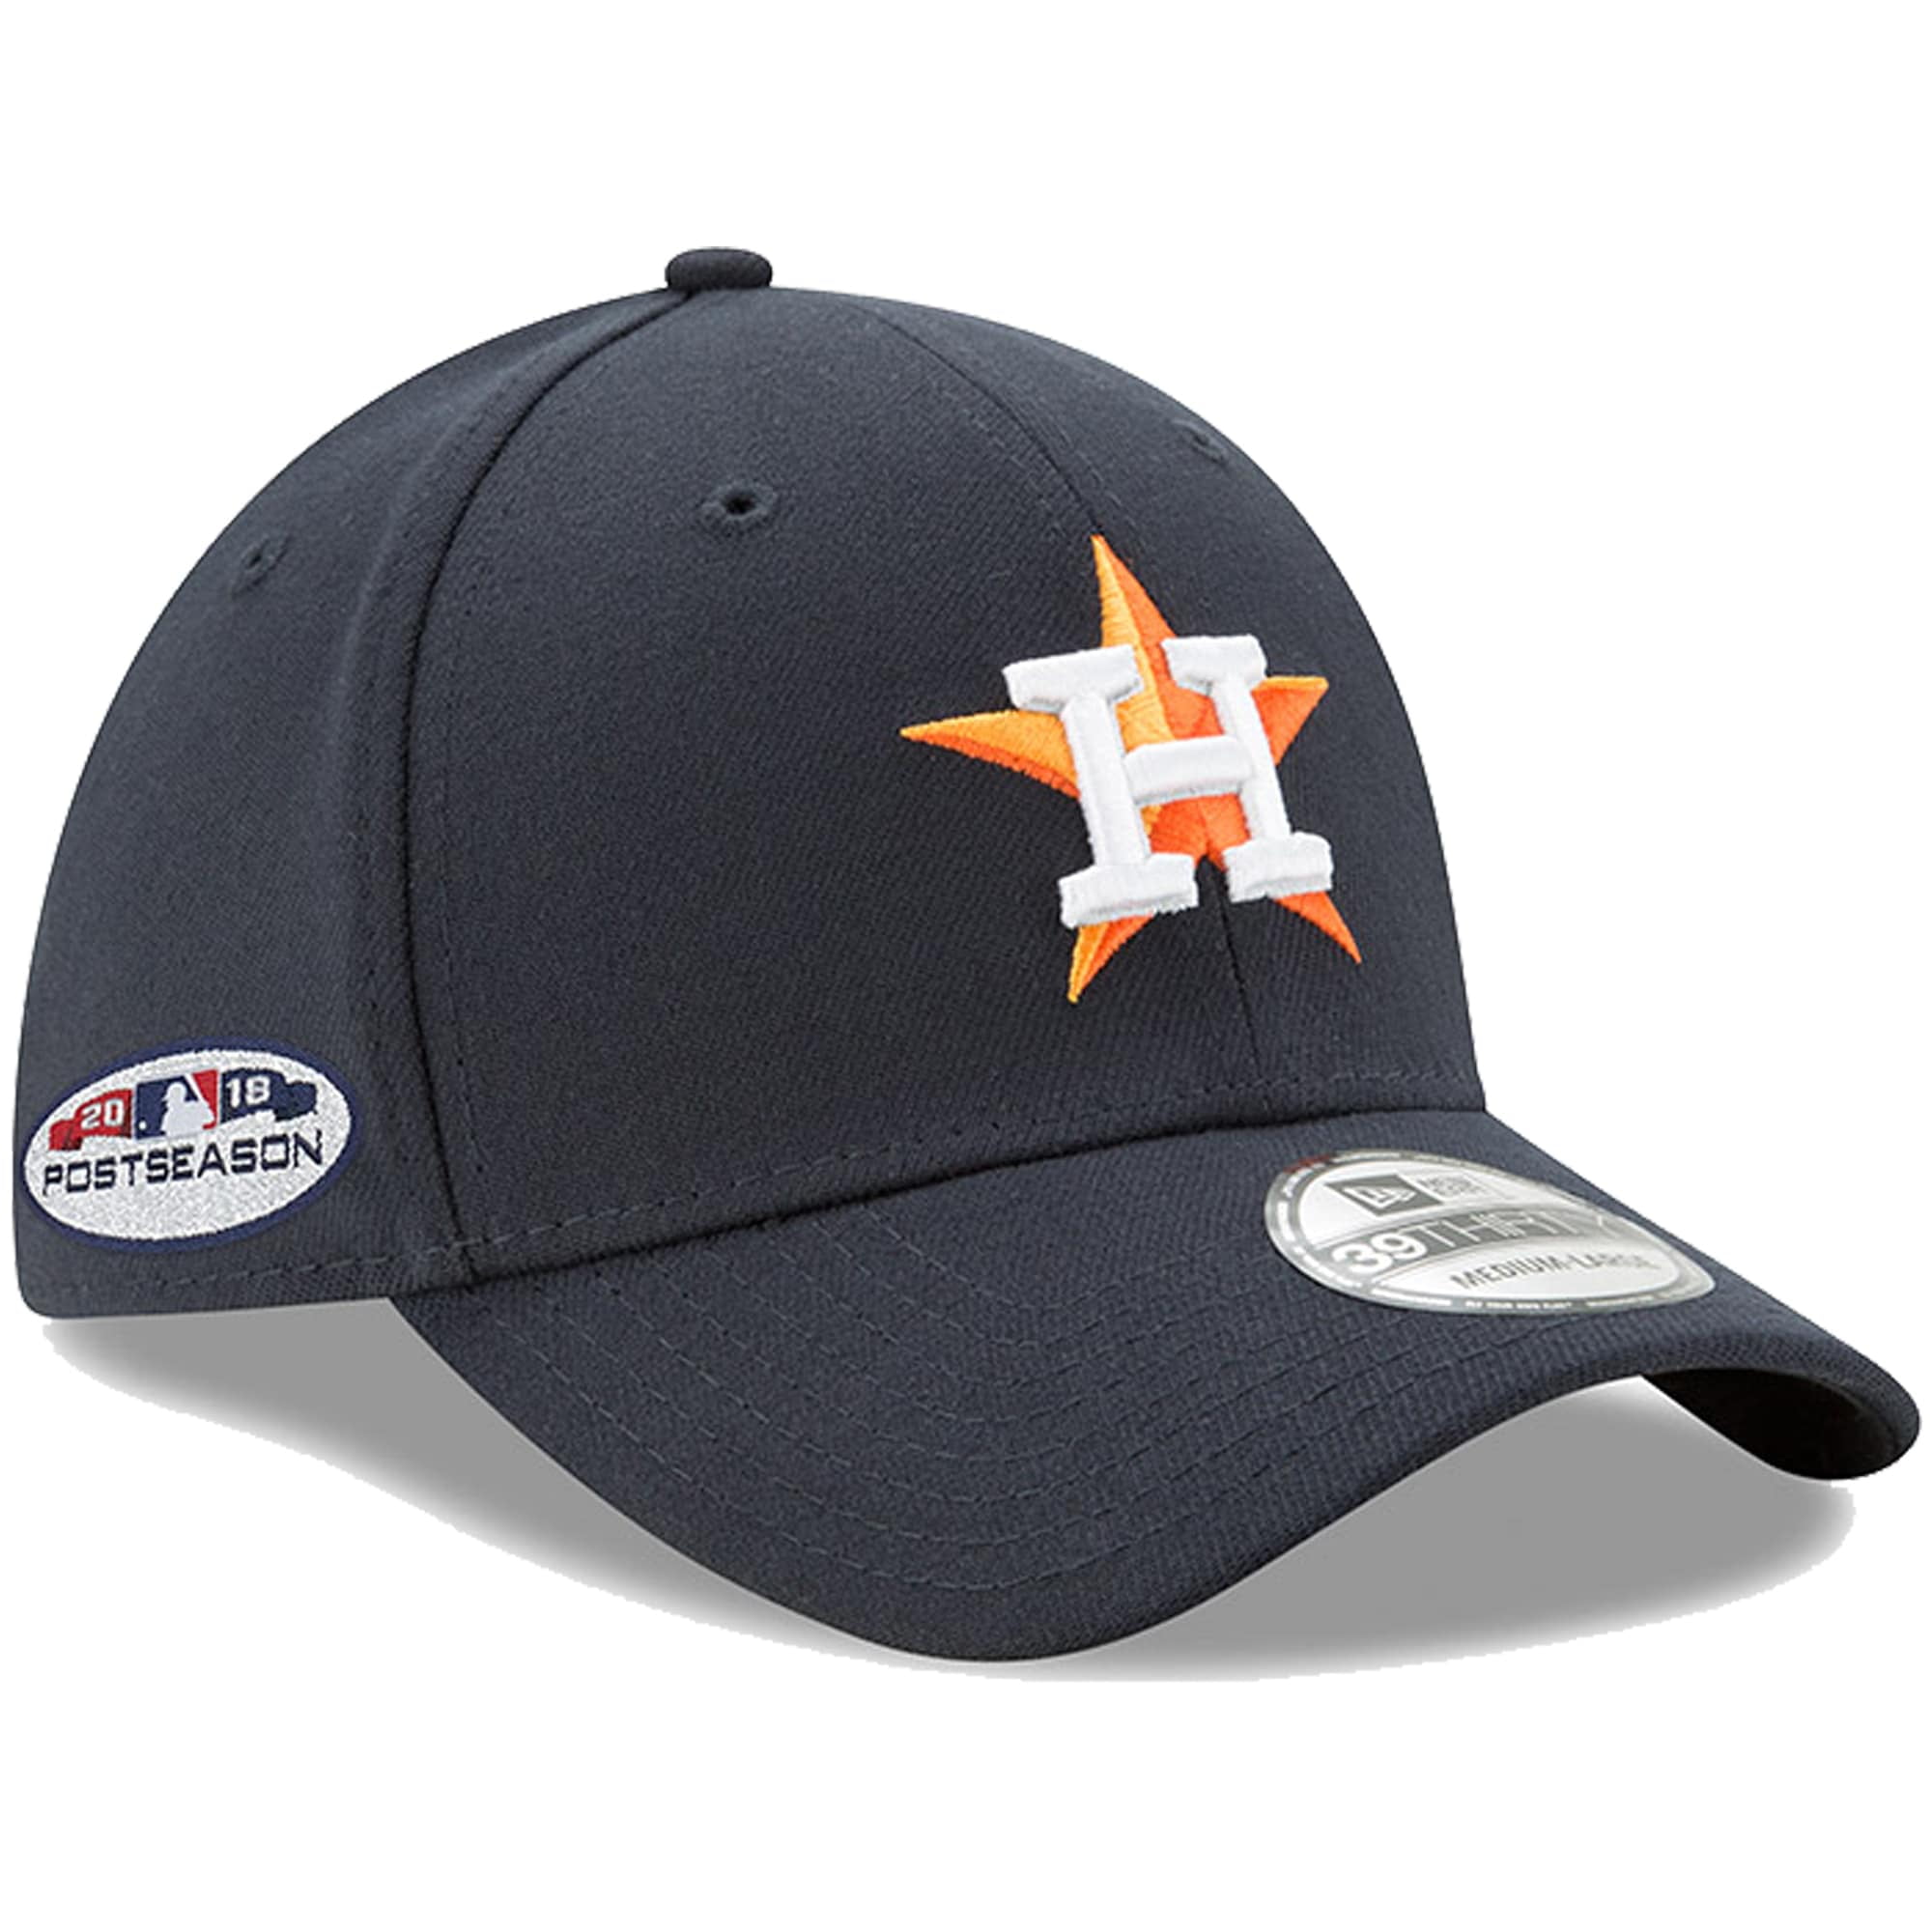 Houston Astros New Era 2018 Postseason Side Patch 39THIRTY Flex Fit hat ...